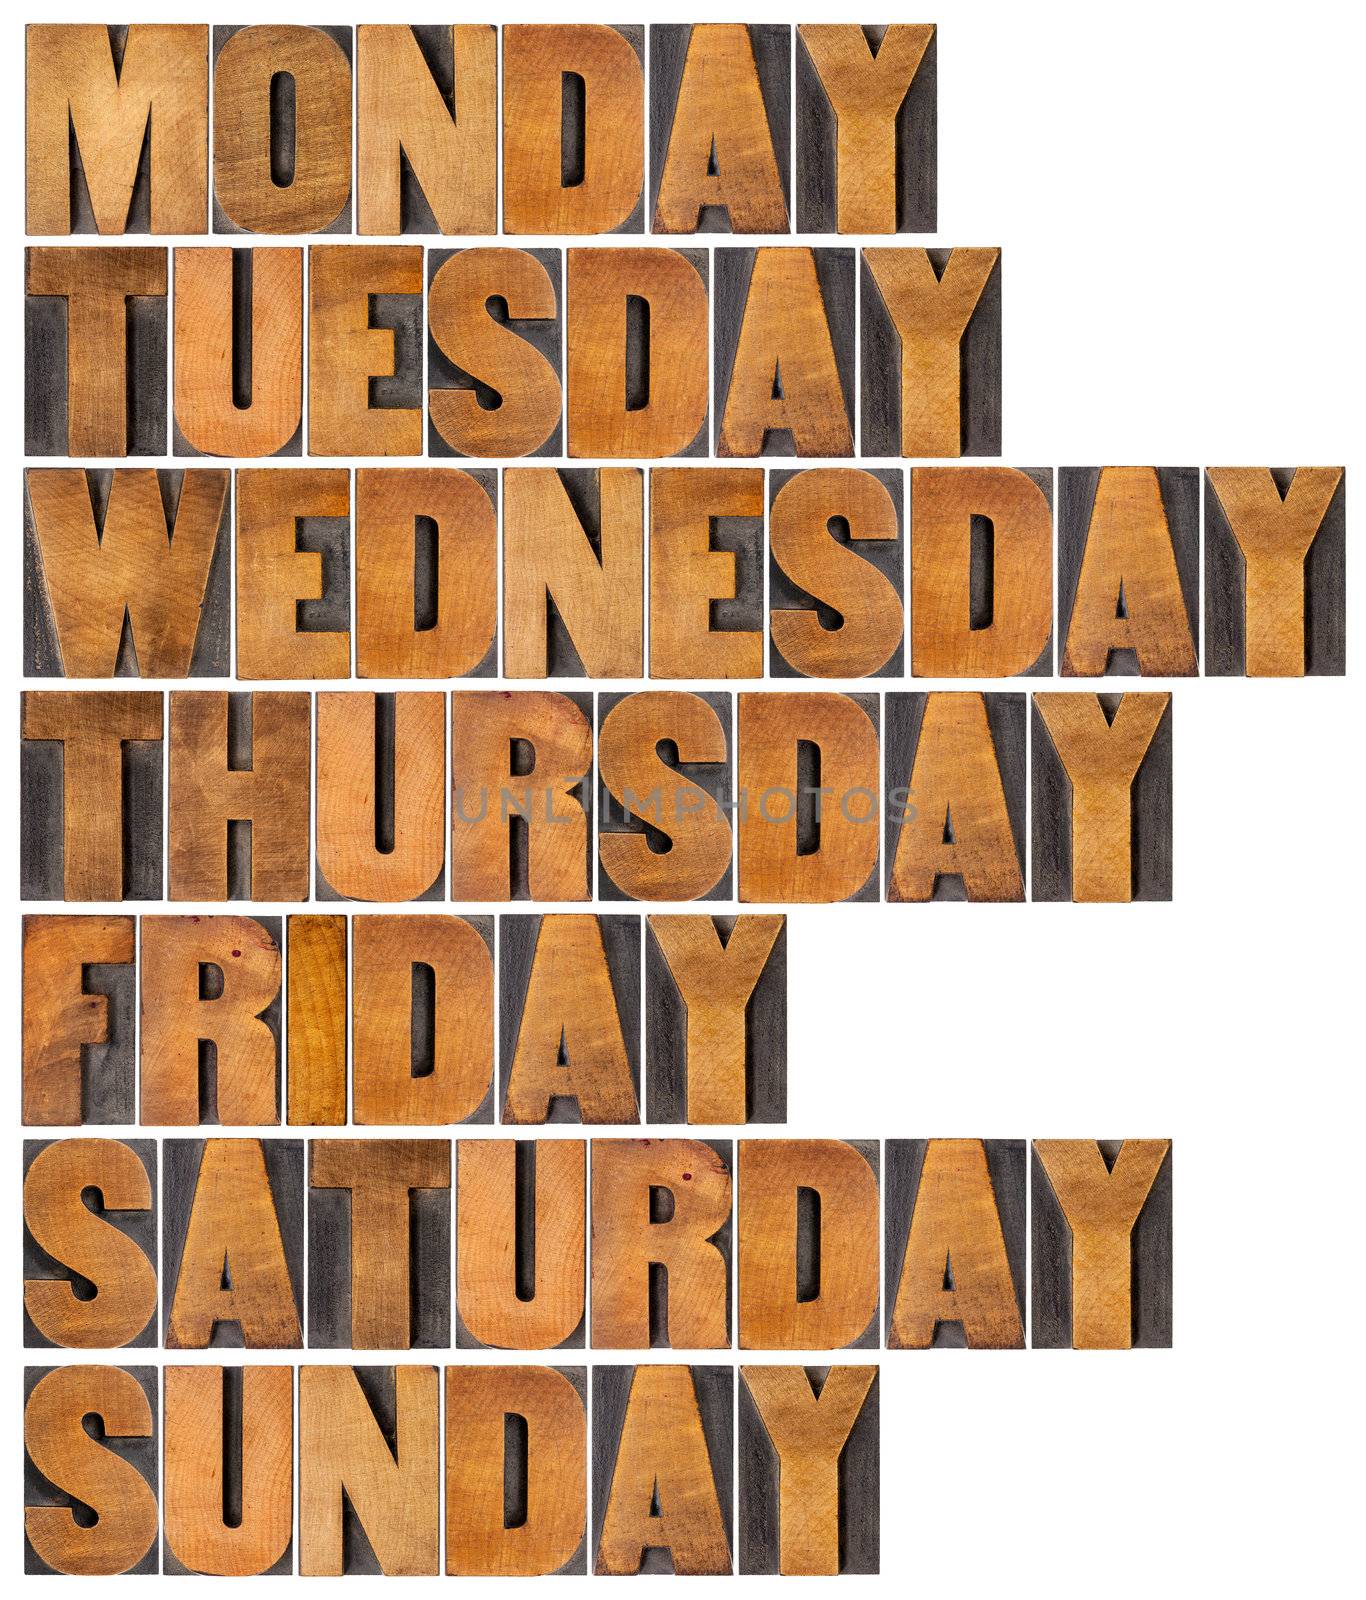 days of week in wood type by PixelsAway